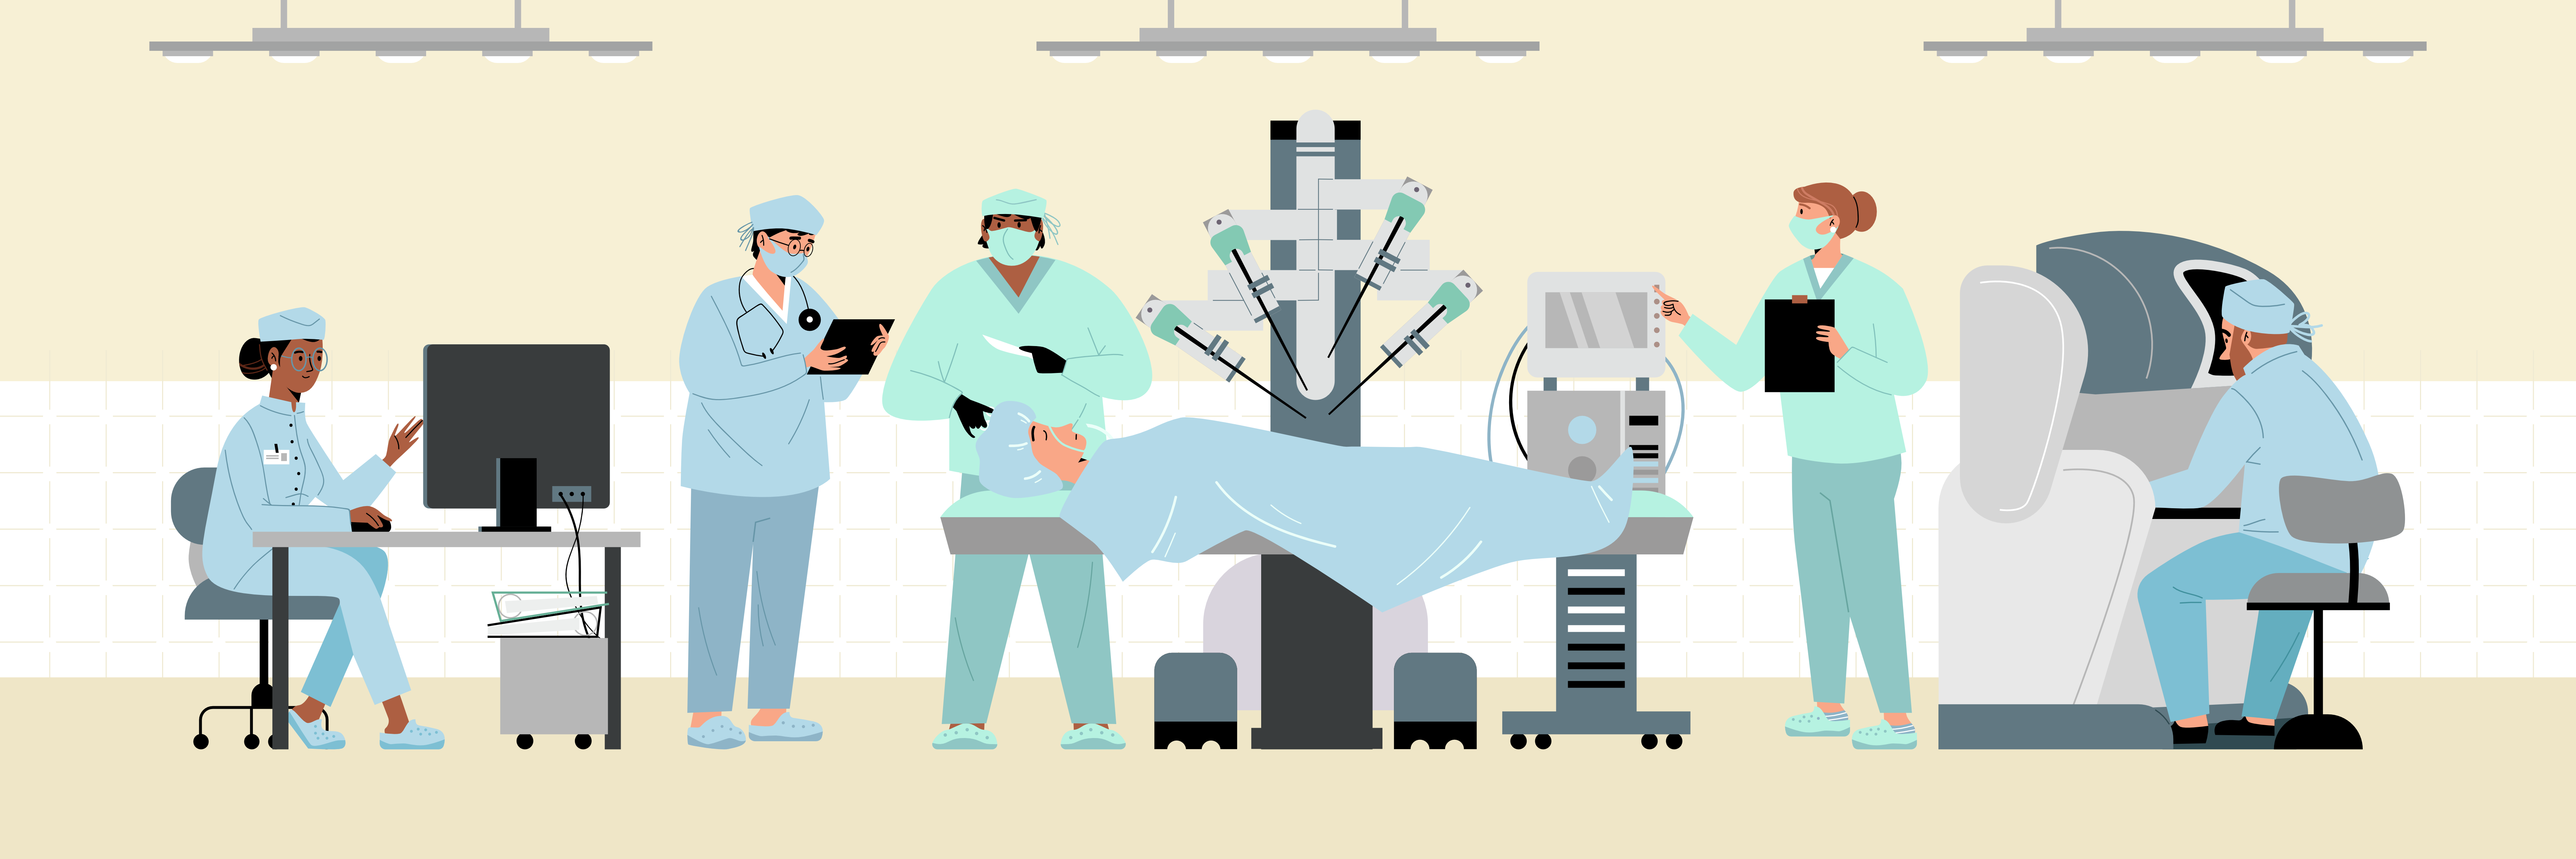 Robotic surgery scene